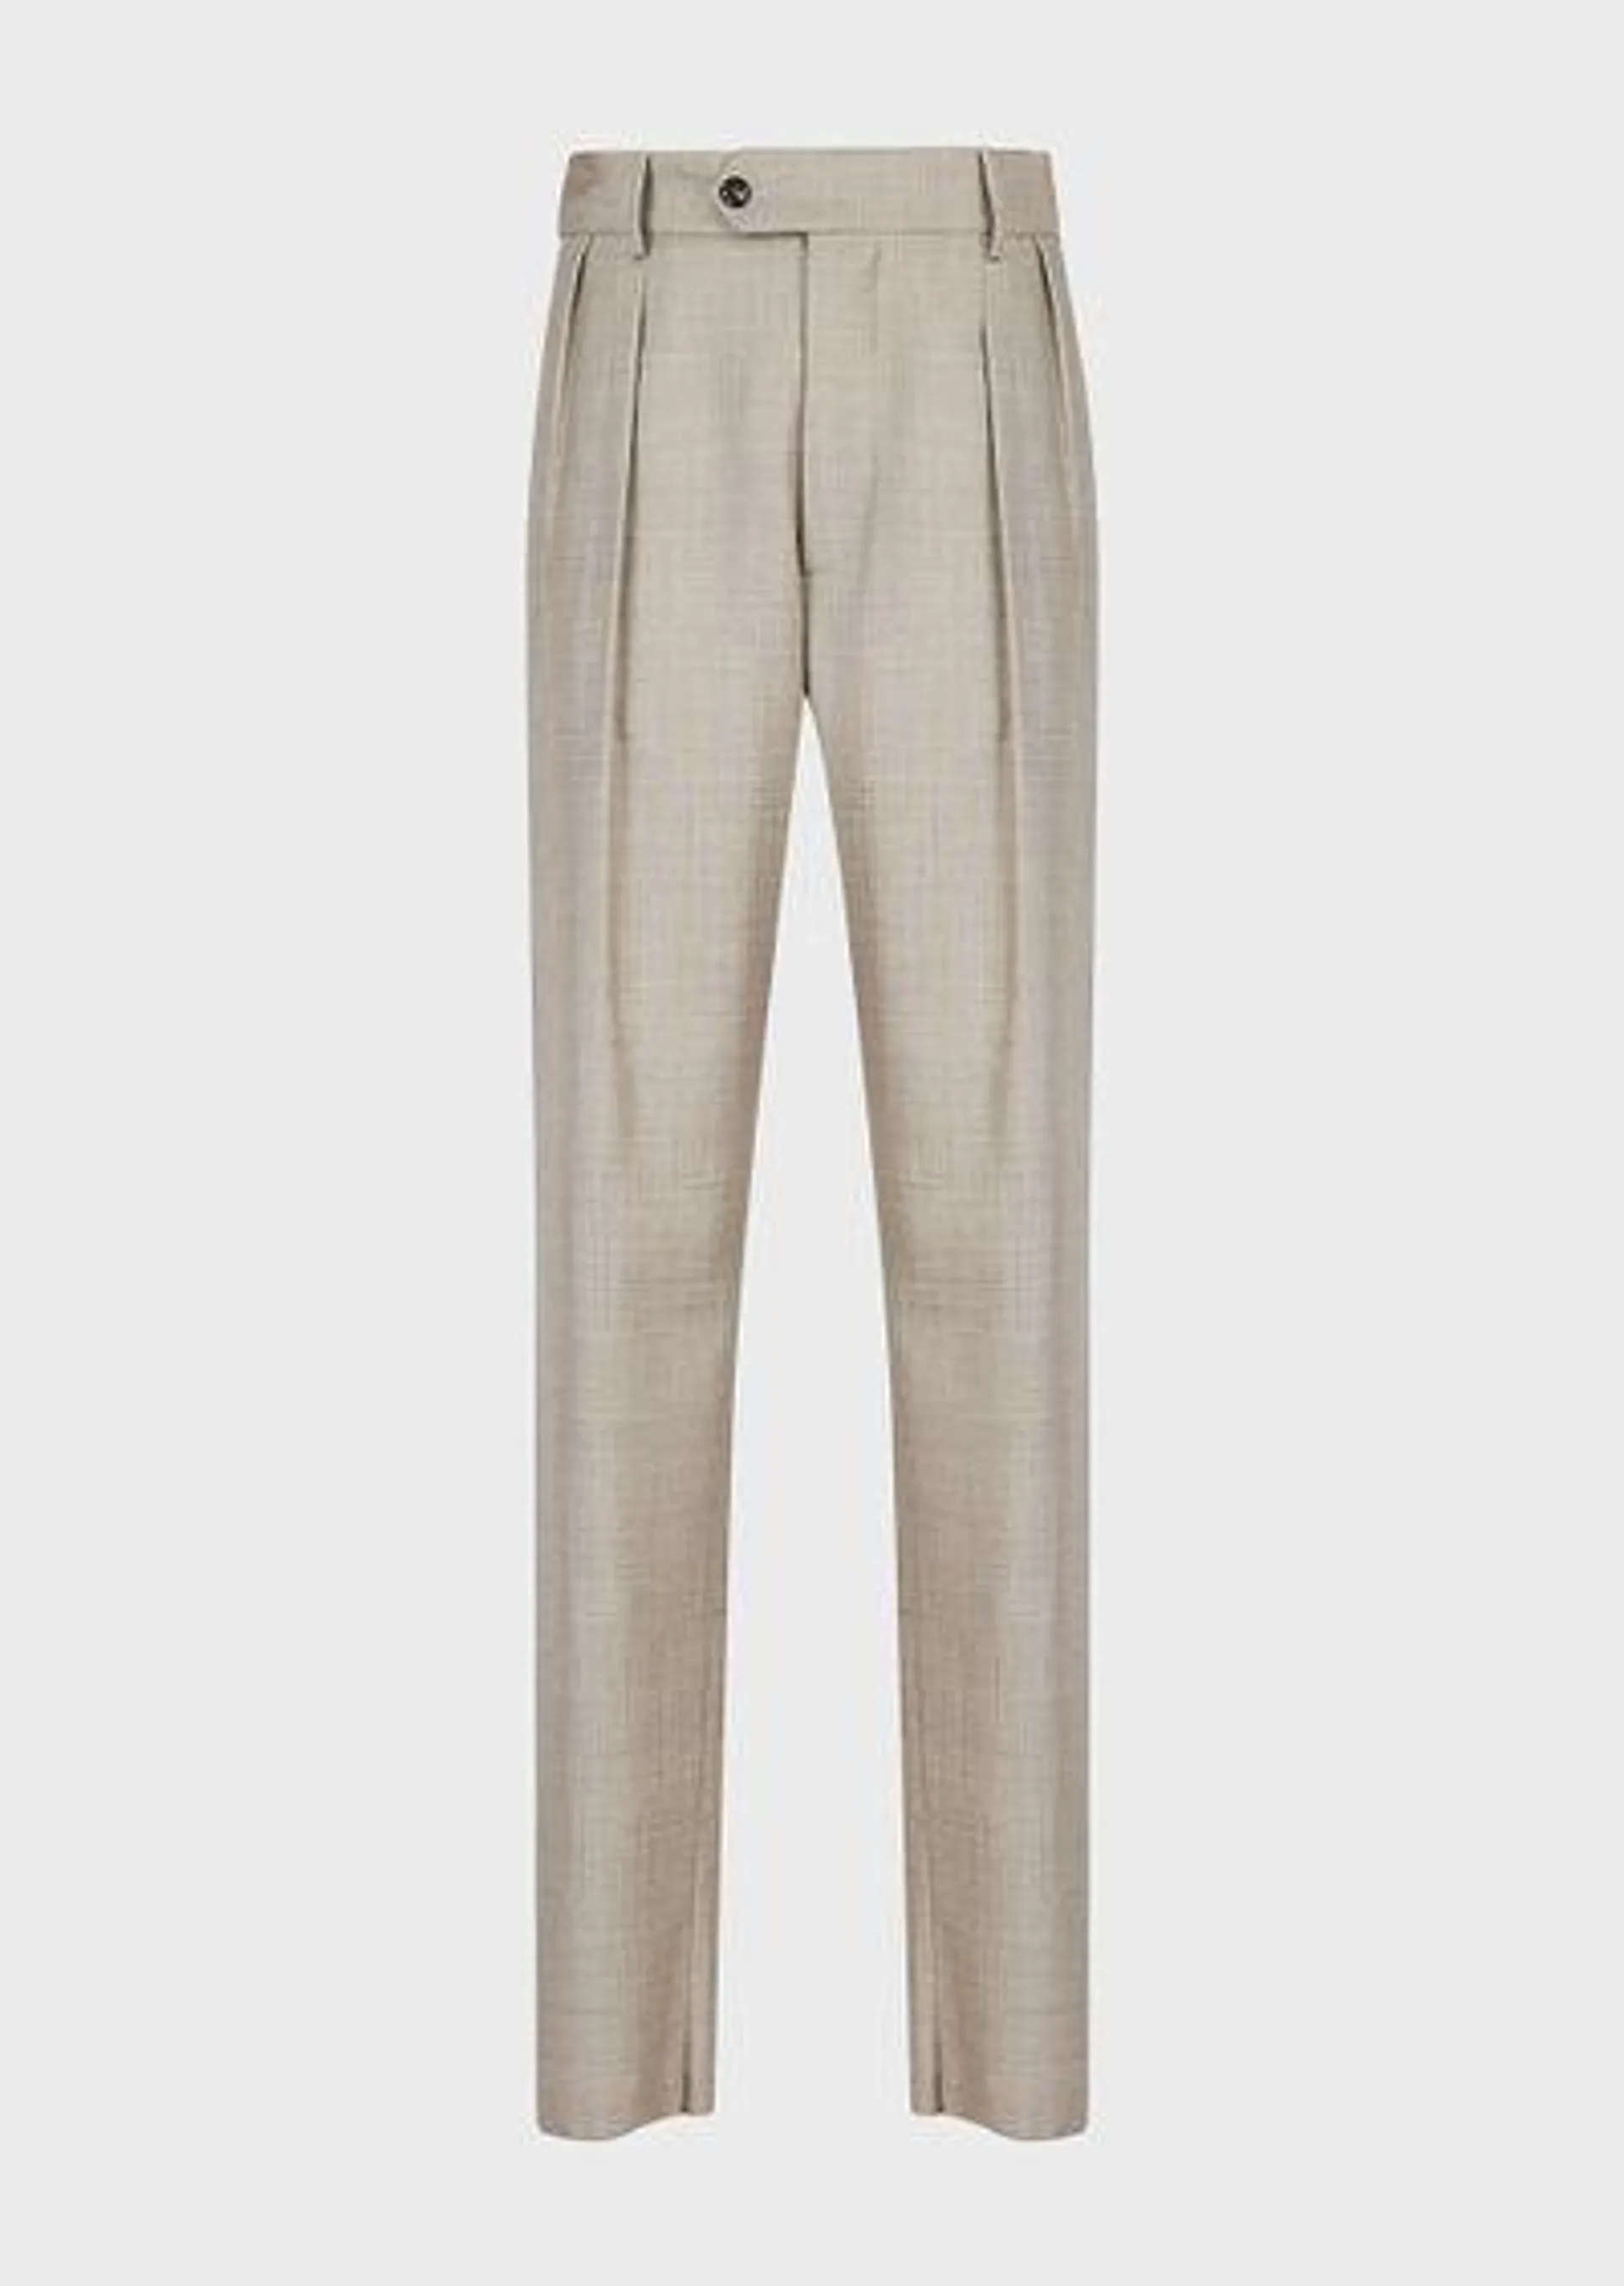 Two-pleat trousers in virgin wool, silk and linen